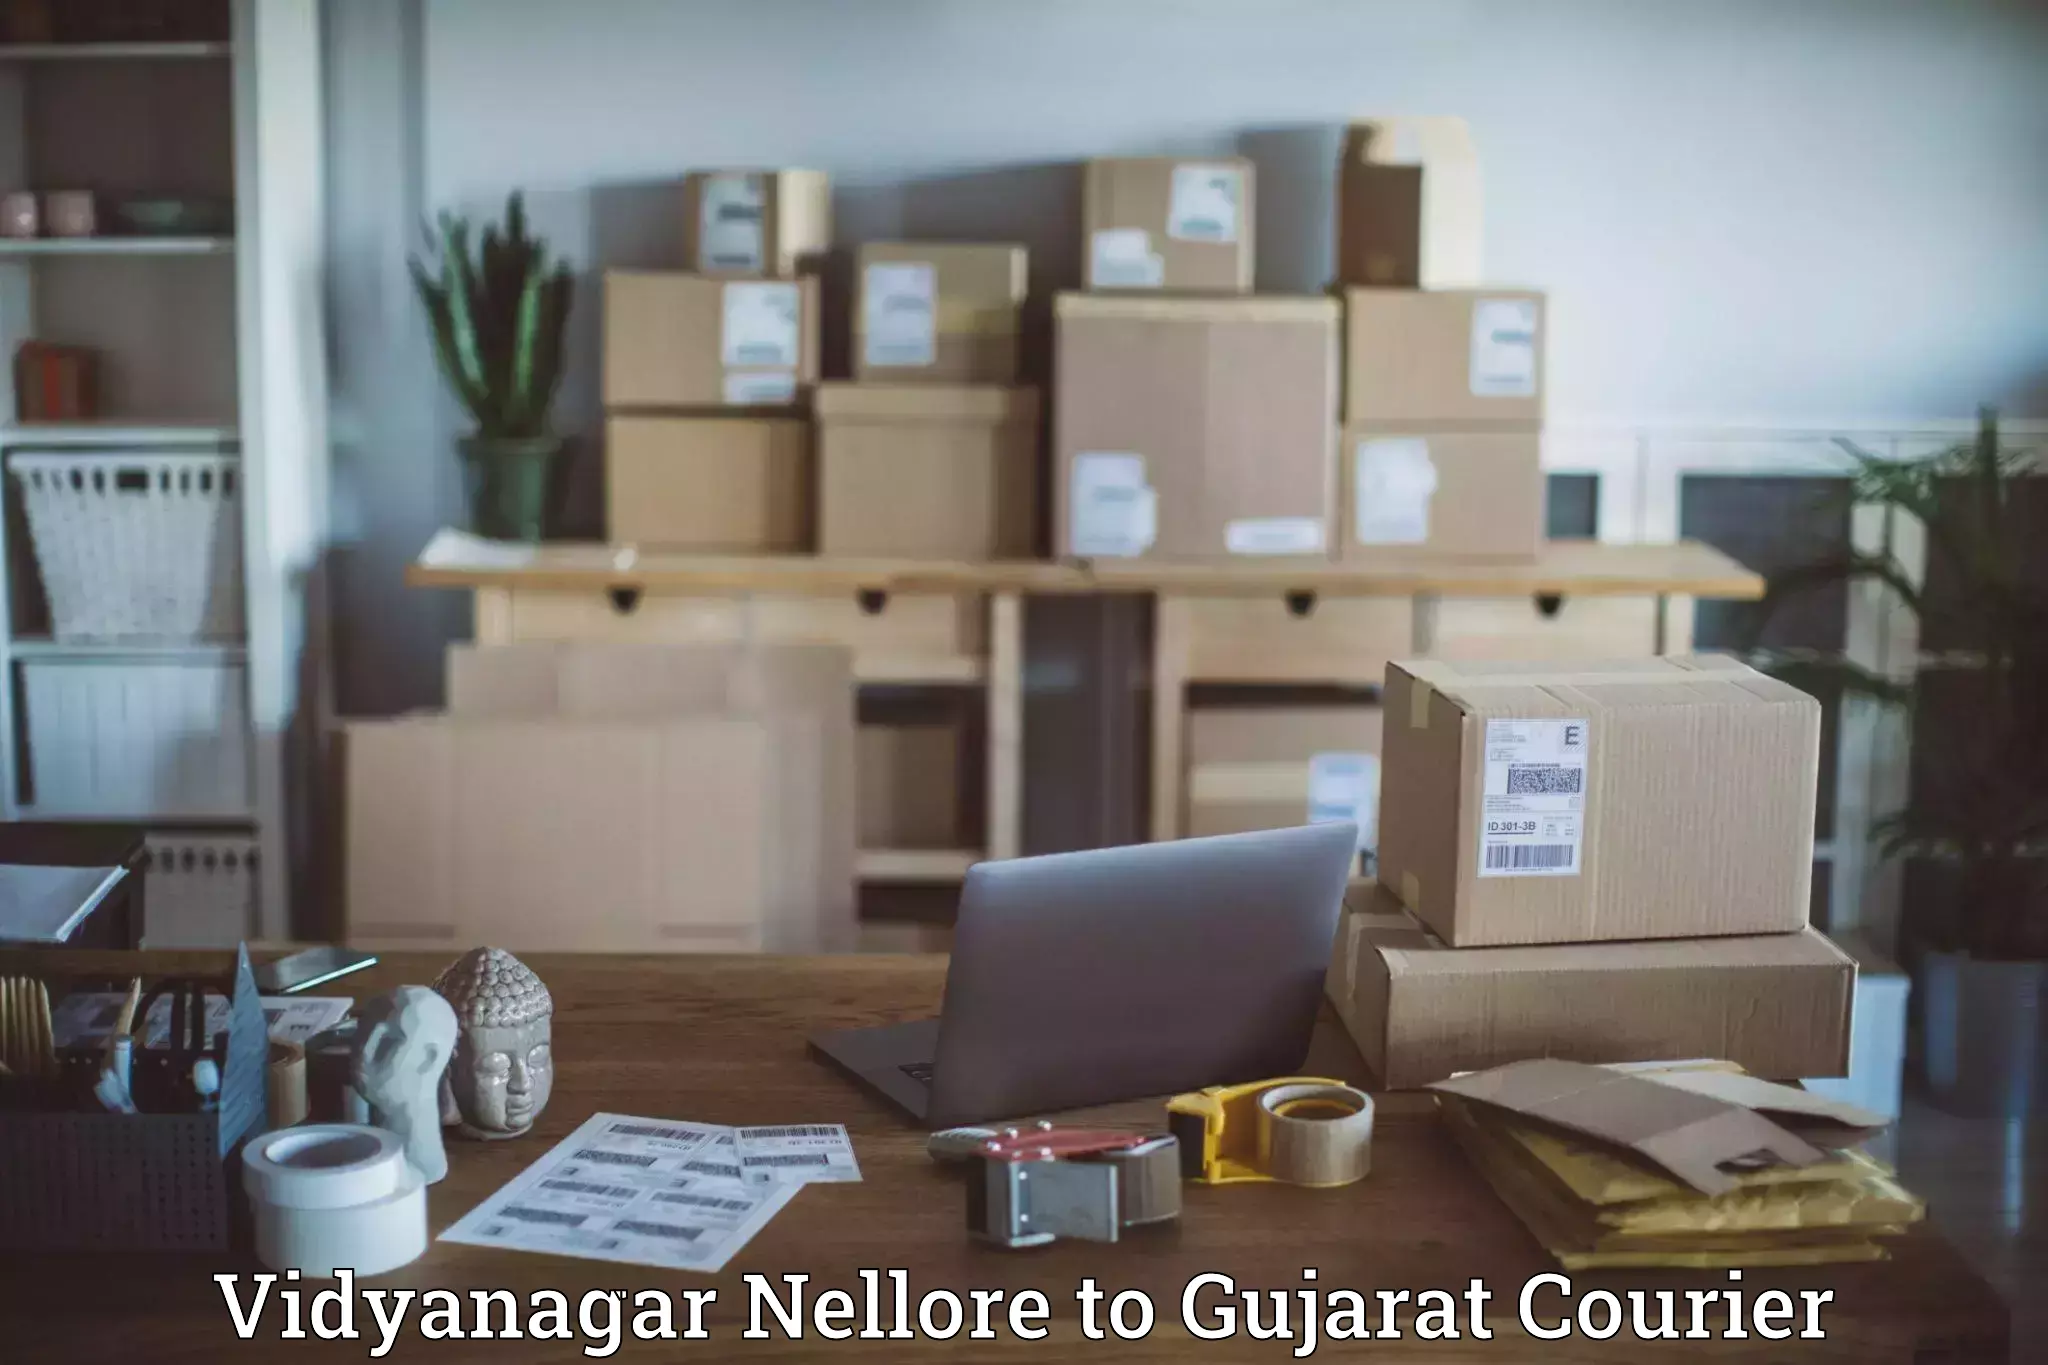 Courier service partnerships Vidyanagar Nellore to Mahuva